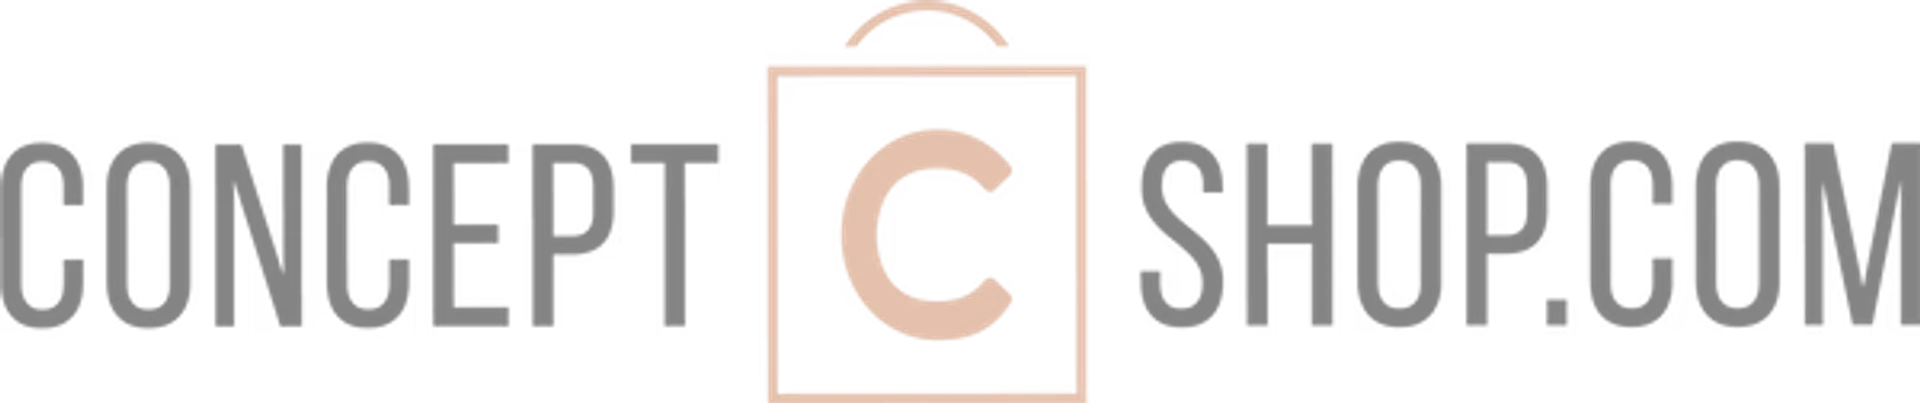 CONEPT C SHOP logo de circulaire